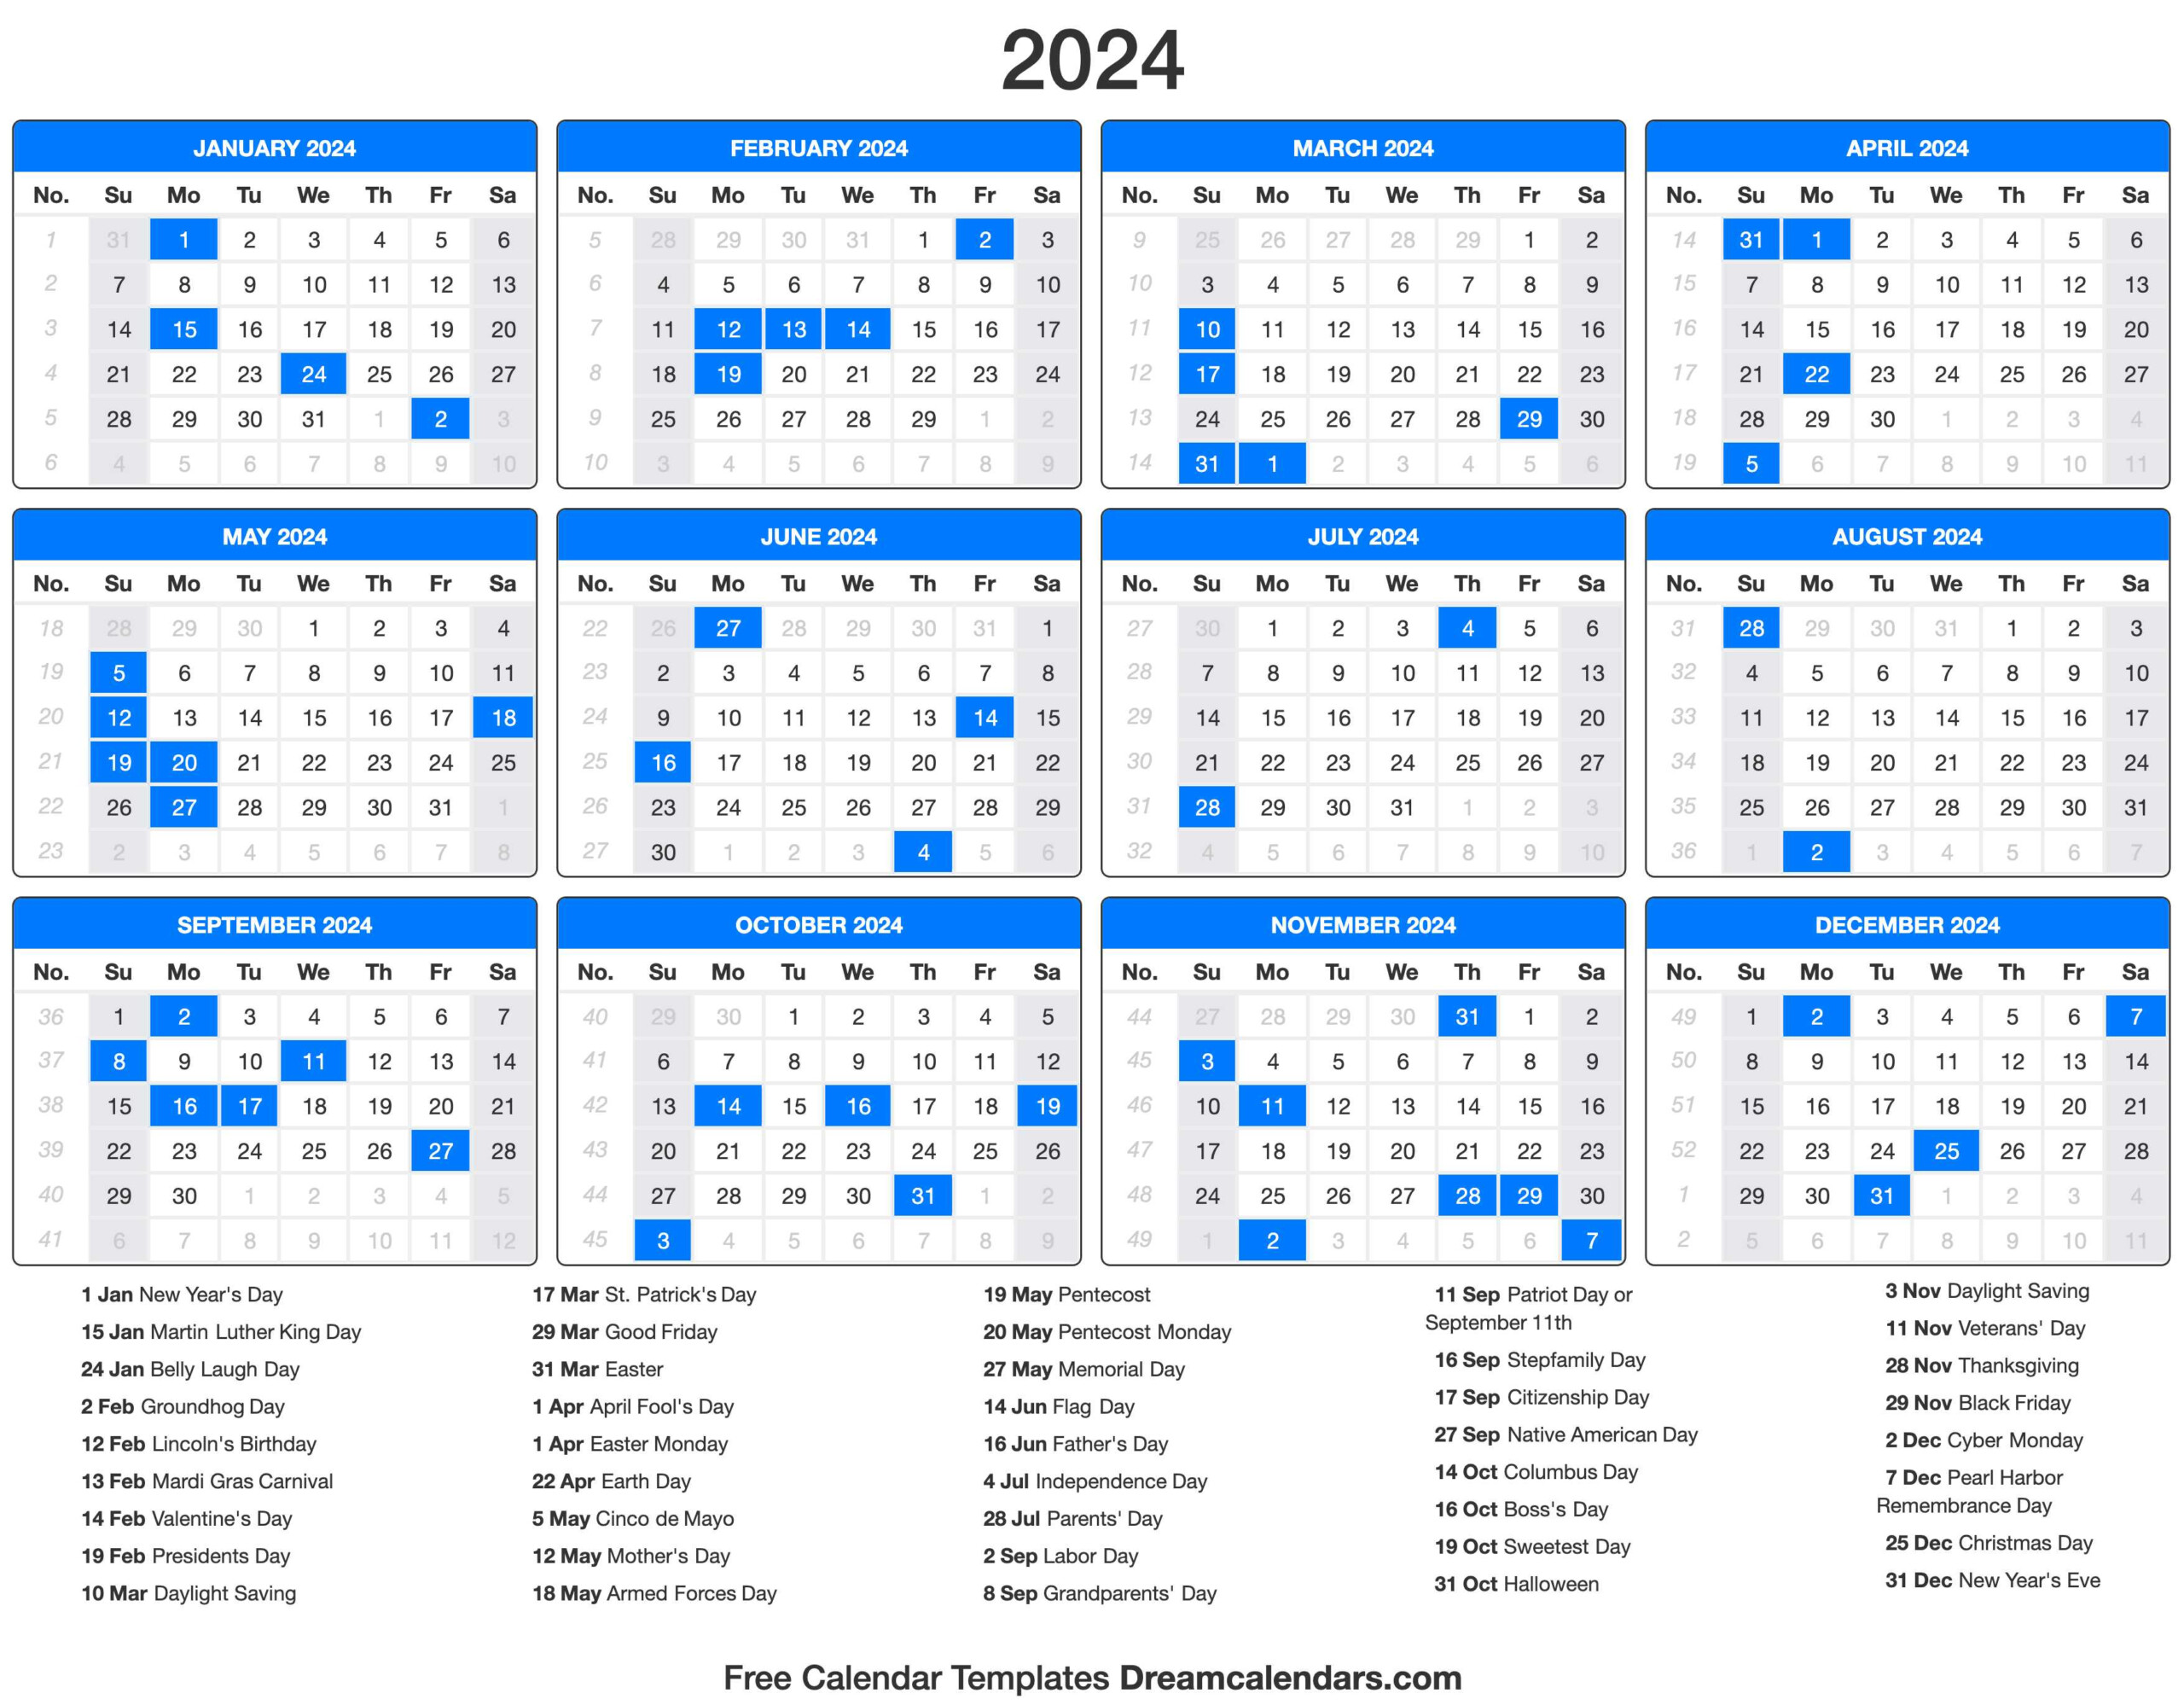 Wssd Calendar 202424 Fawn Martita